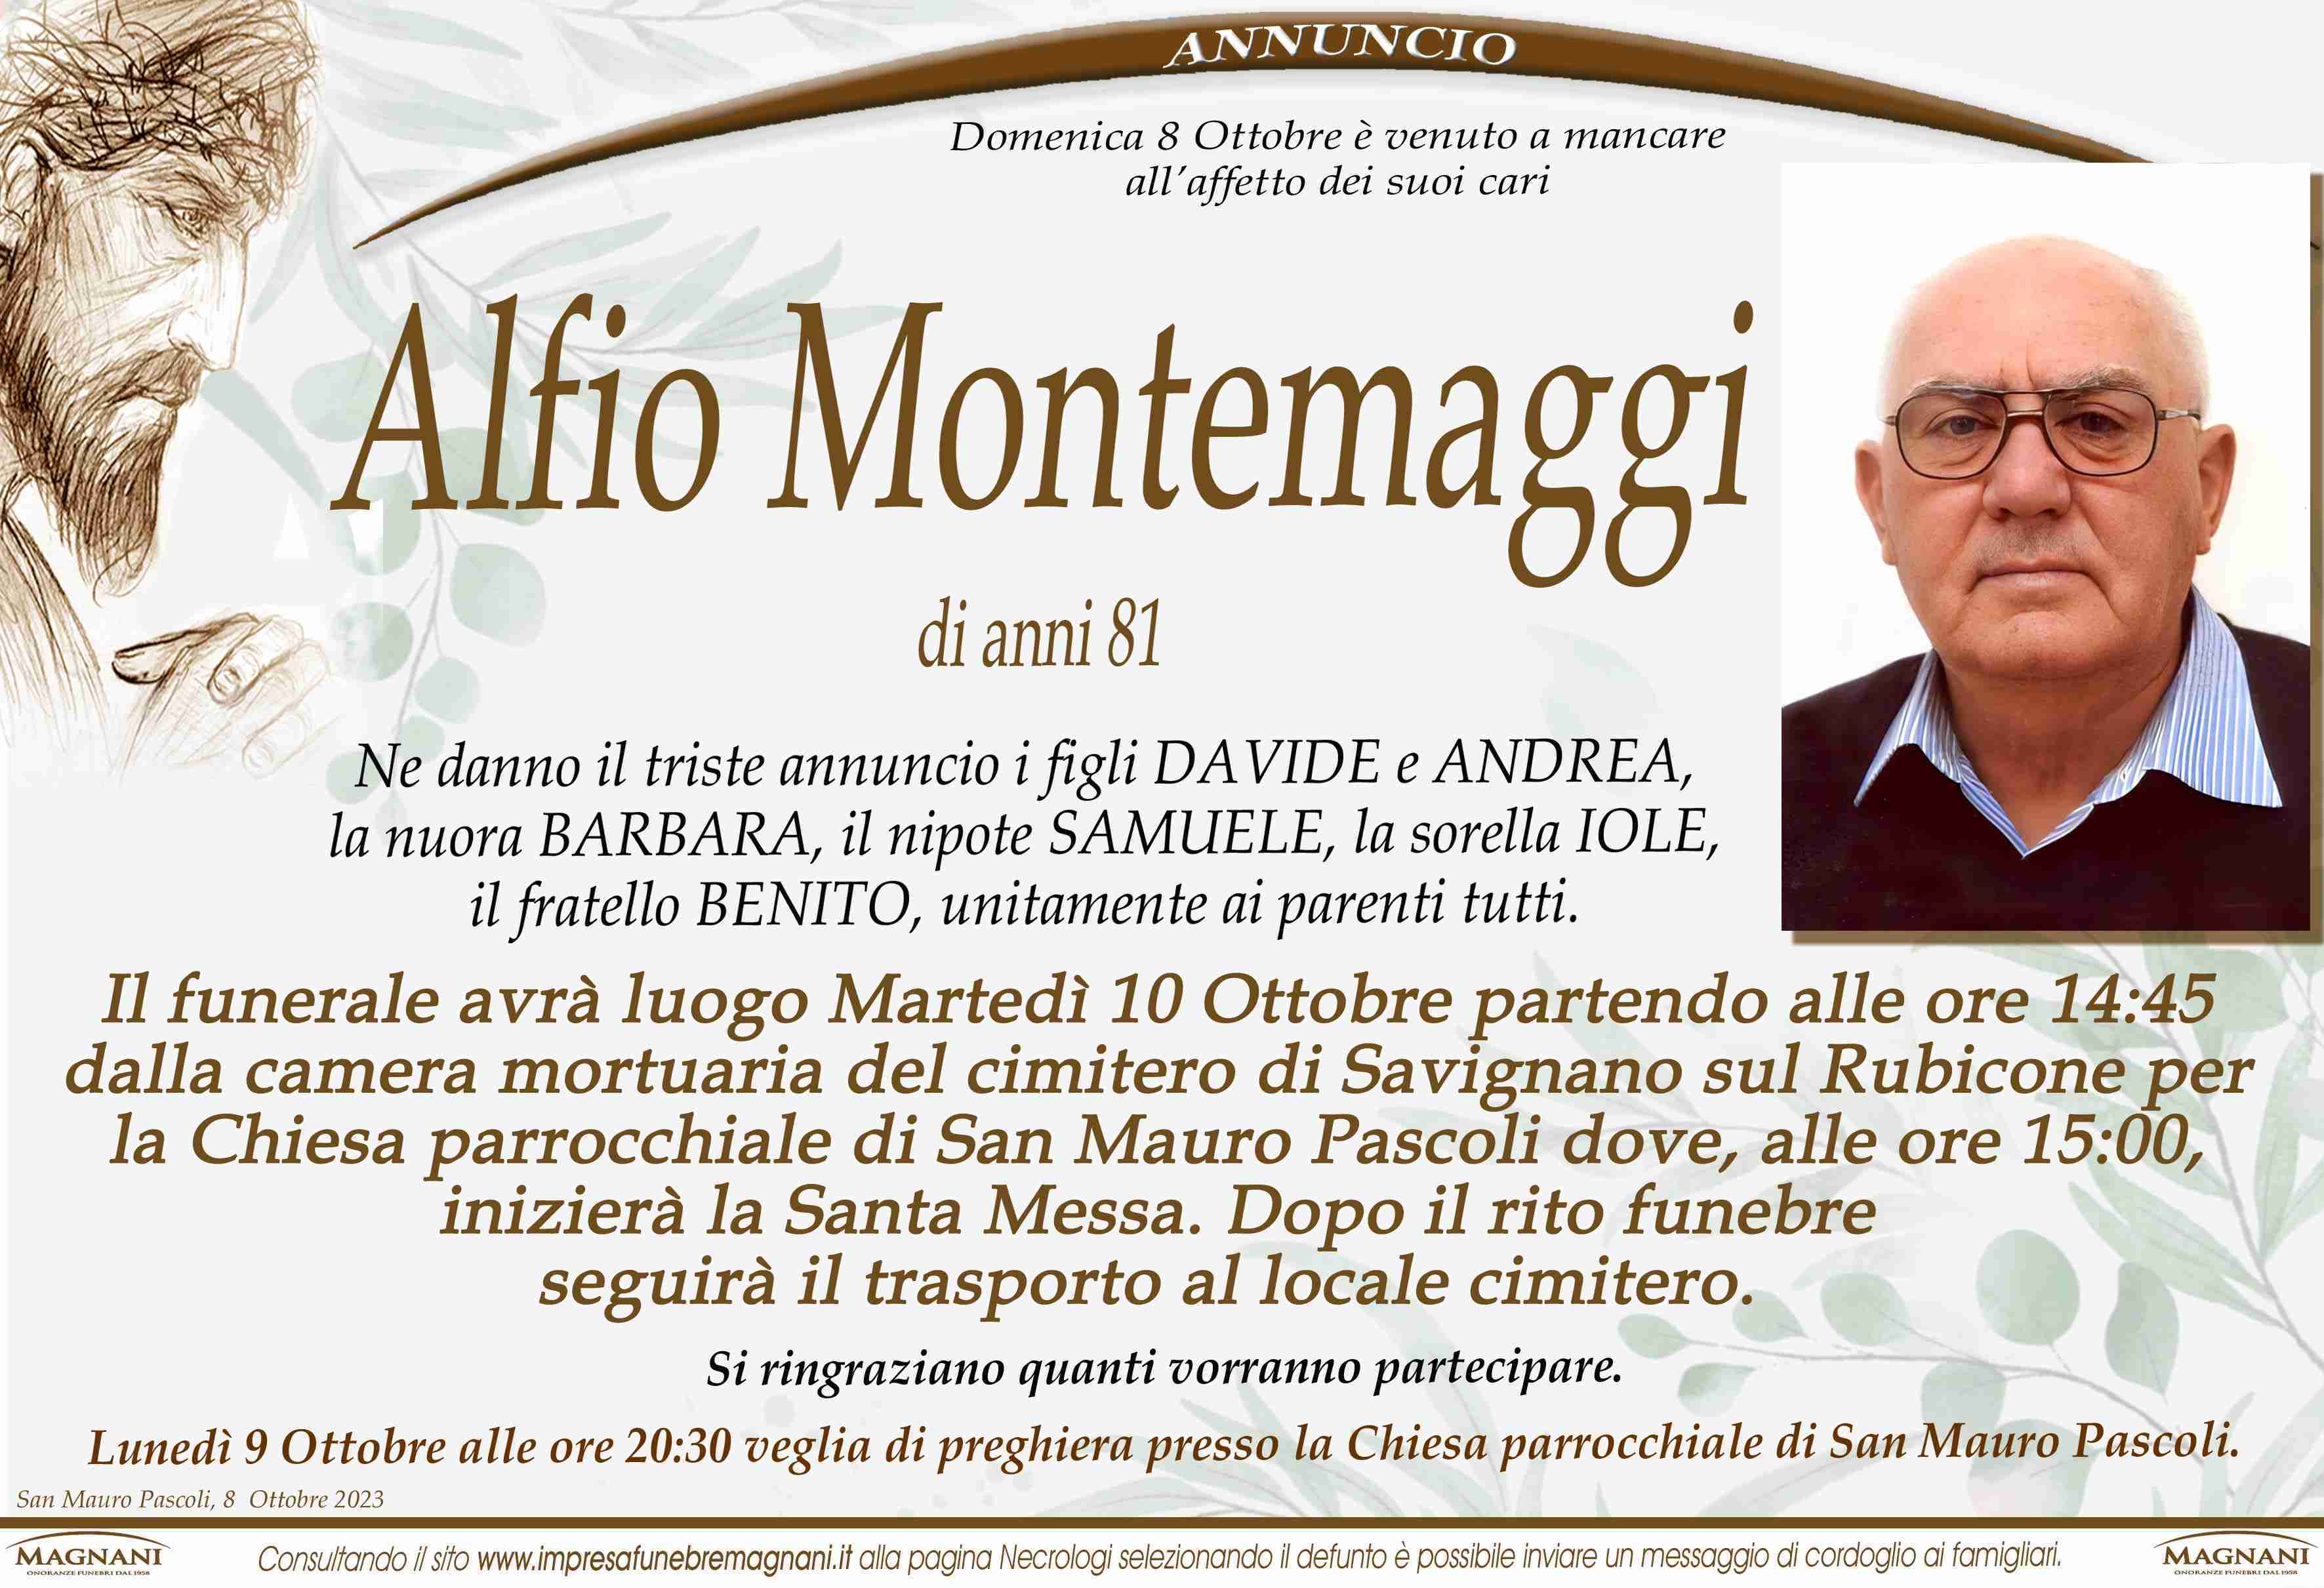 Alfio Montemaggi